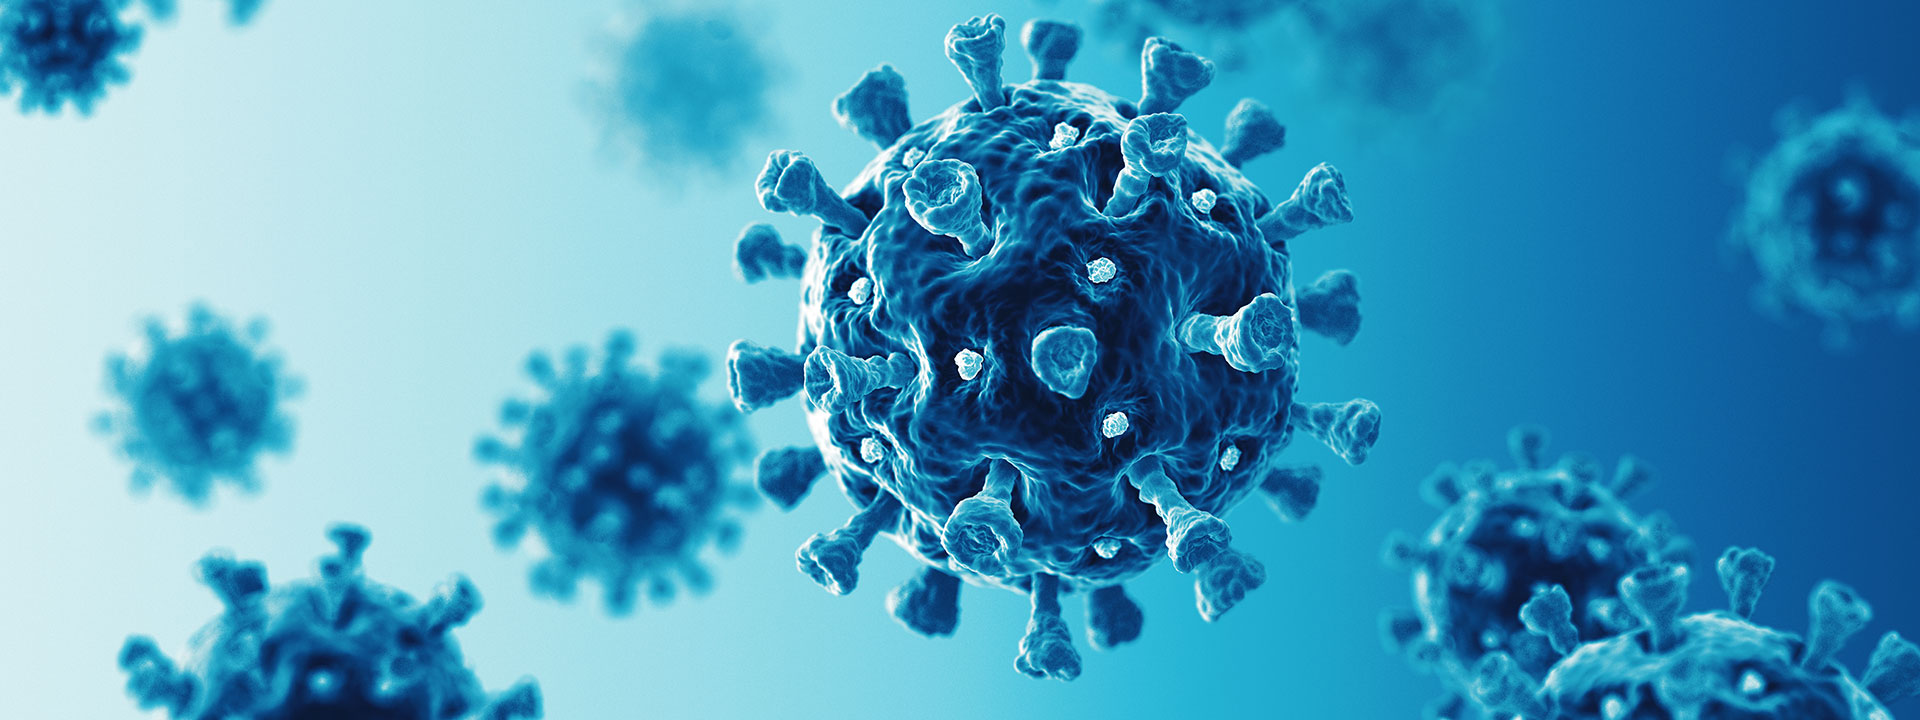 Illustration of SARS-CoV-2, which causes Coronavirus Disease 2019 (COVID-19)